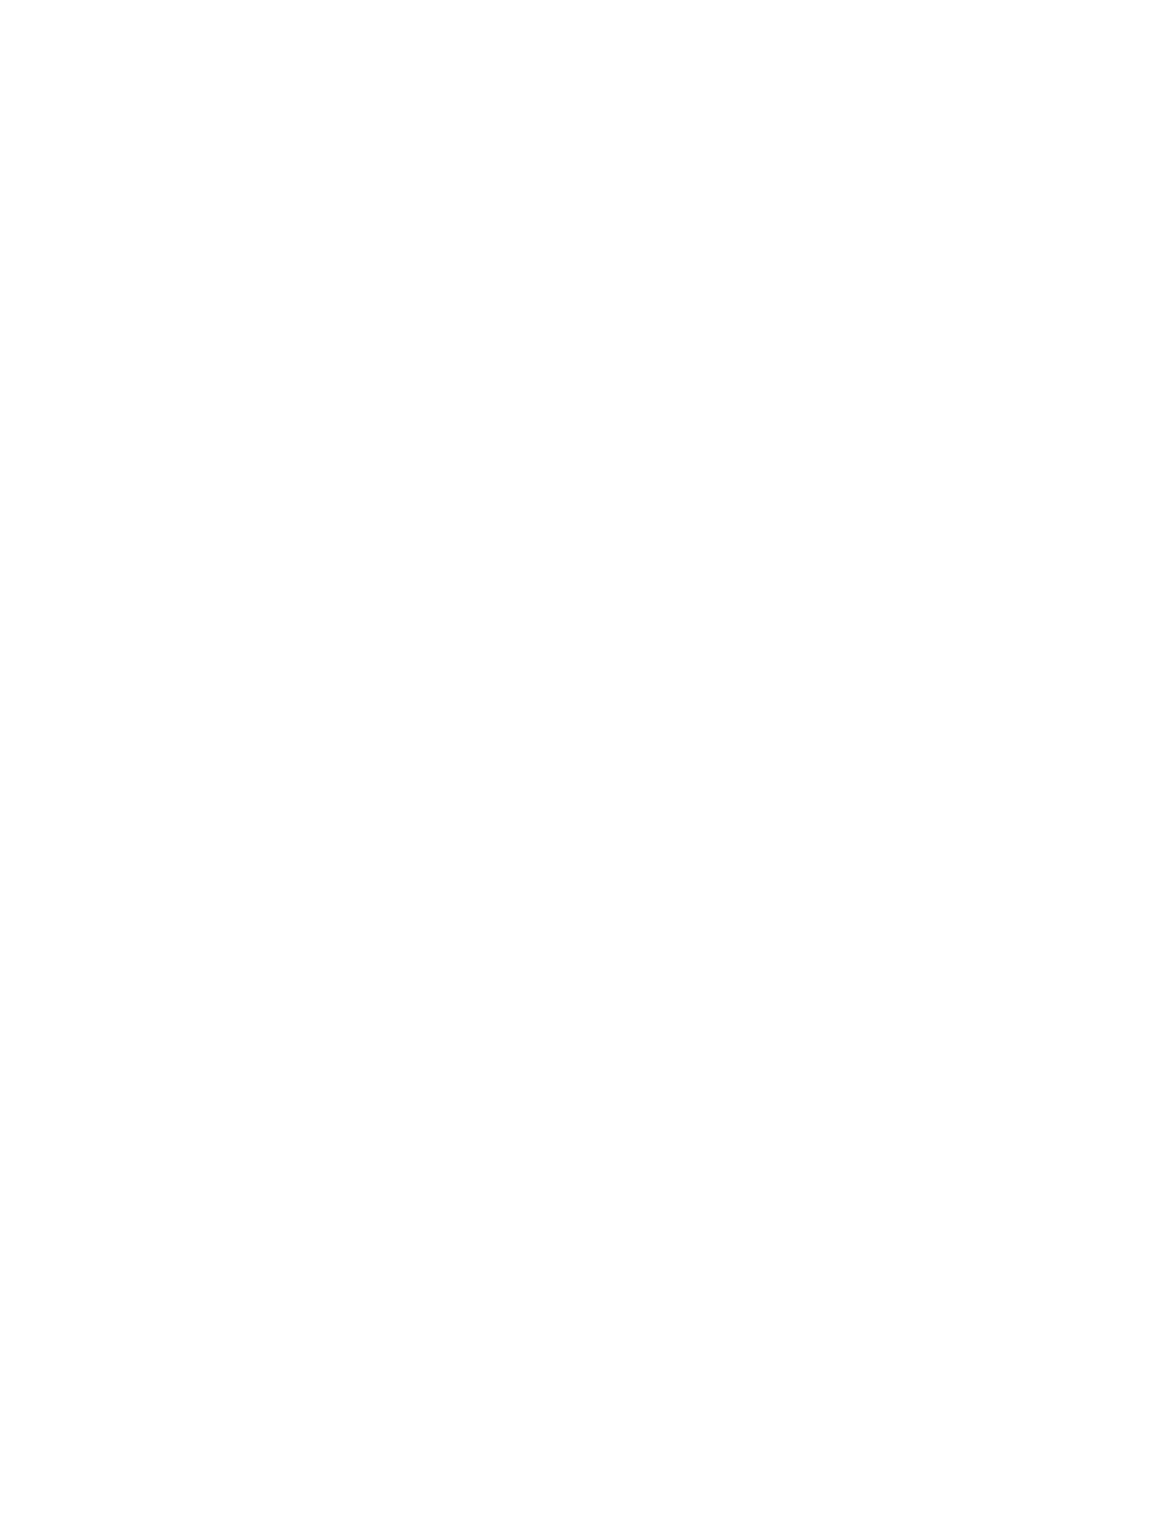 Jardine Cycle & Carriage logo pour fonds sombres (PNG transparent)